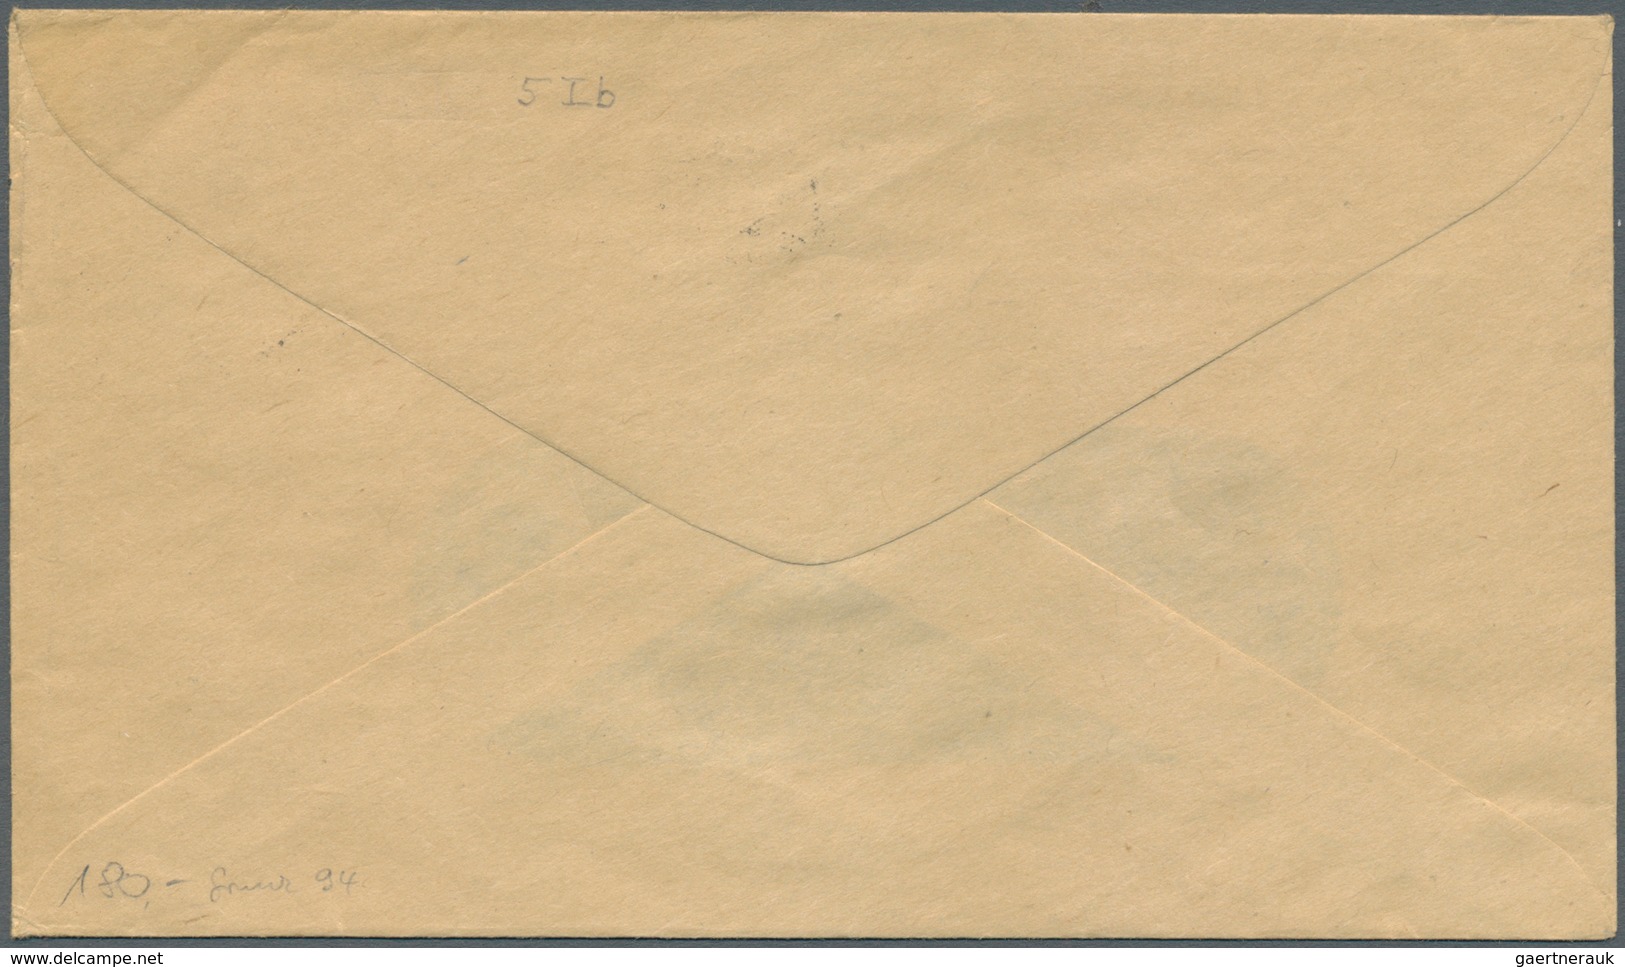 Irland - Ganzsachen: The Walpamur Co. (Ireland) Ldt., Dublin: 1965, 3d. Greenish Blue Window Envelop - Postwaardestukken